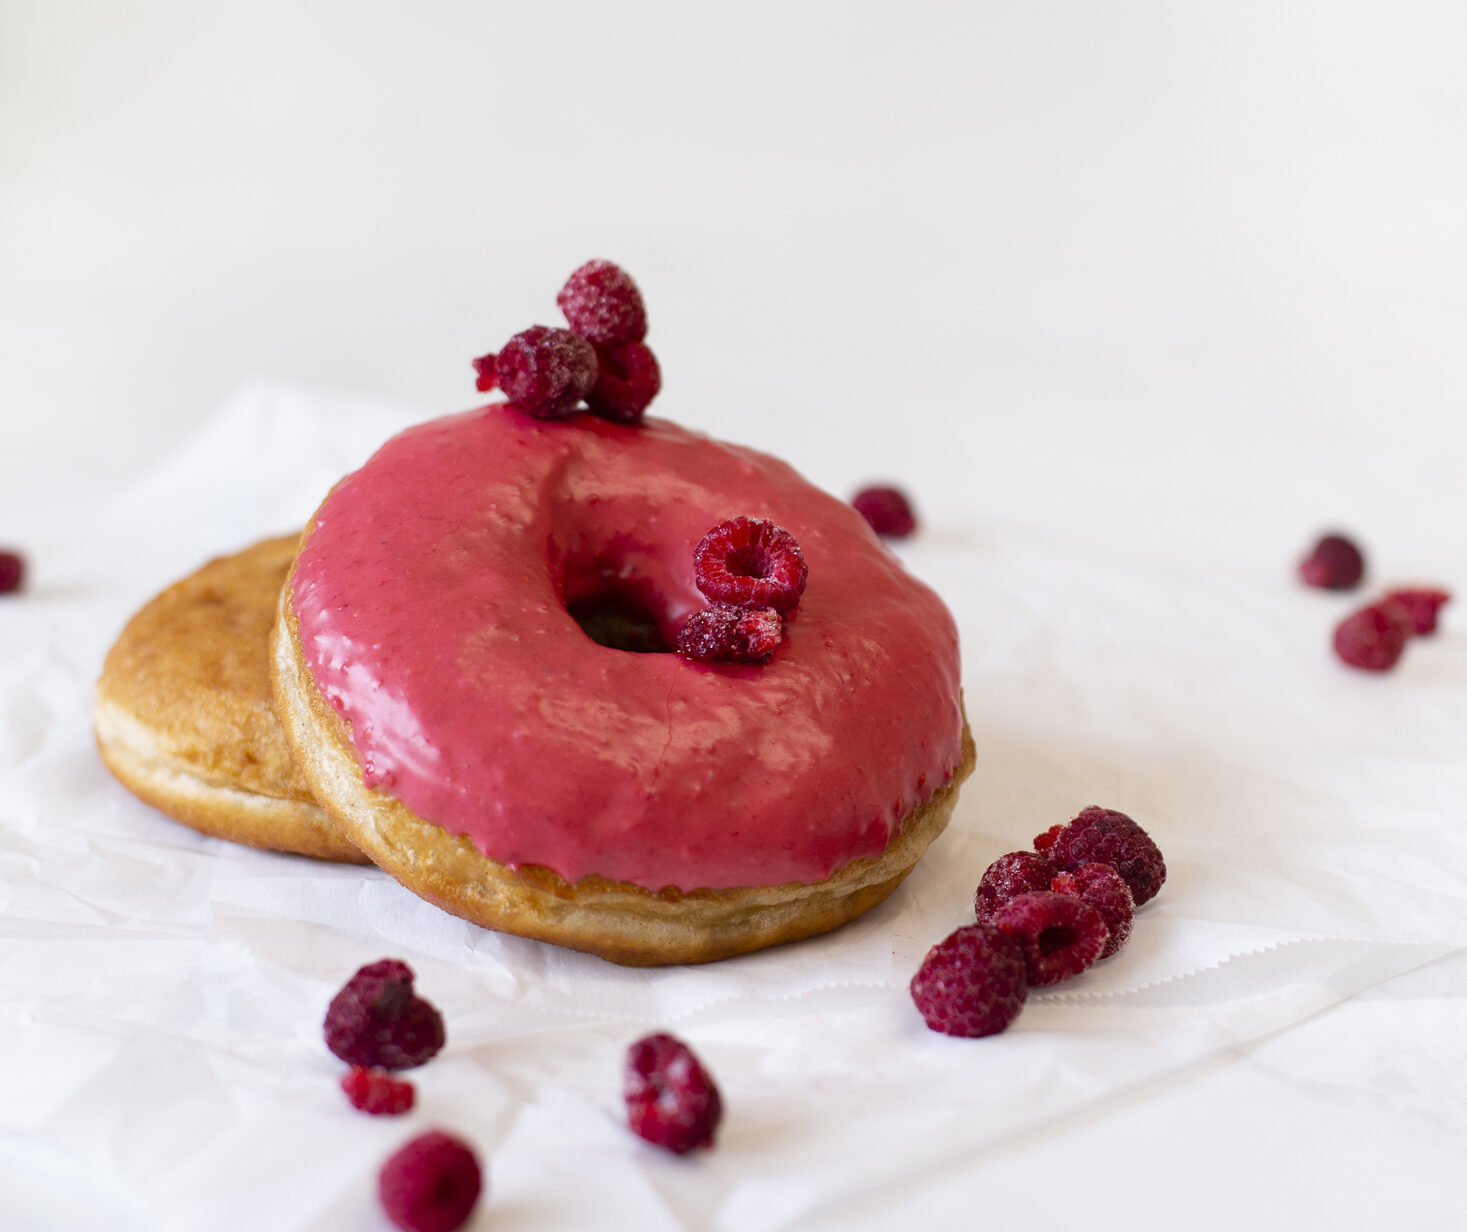 Raspberry Dip vegan donut from Plant Joy in Windsor, Ontario.